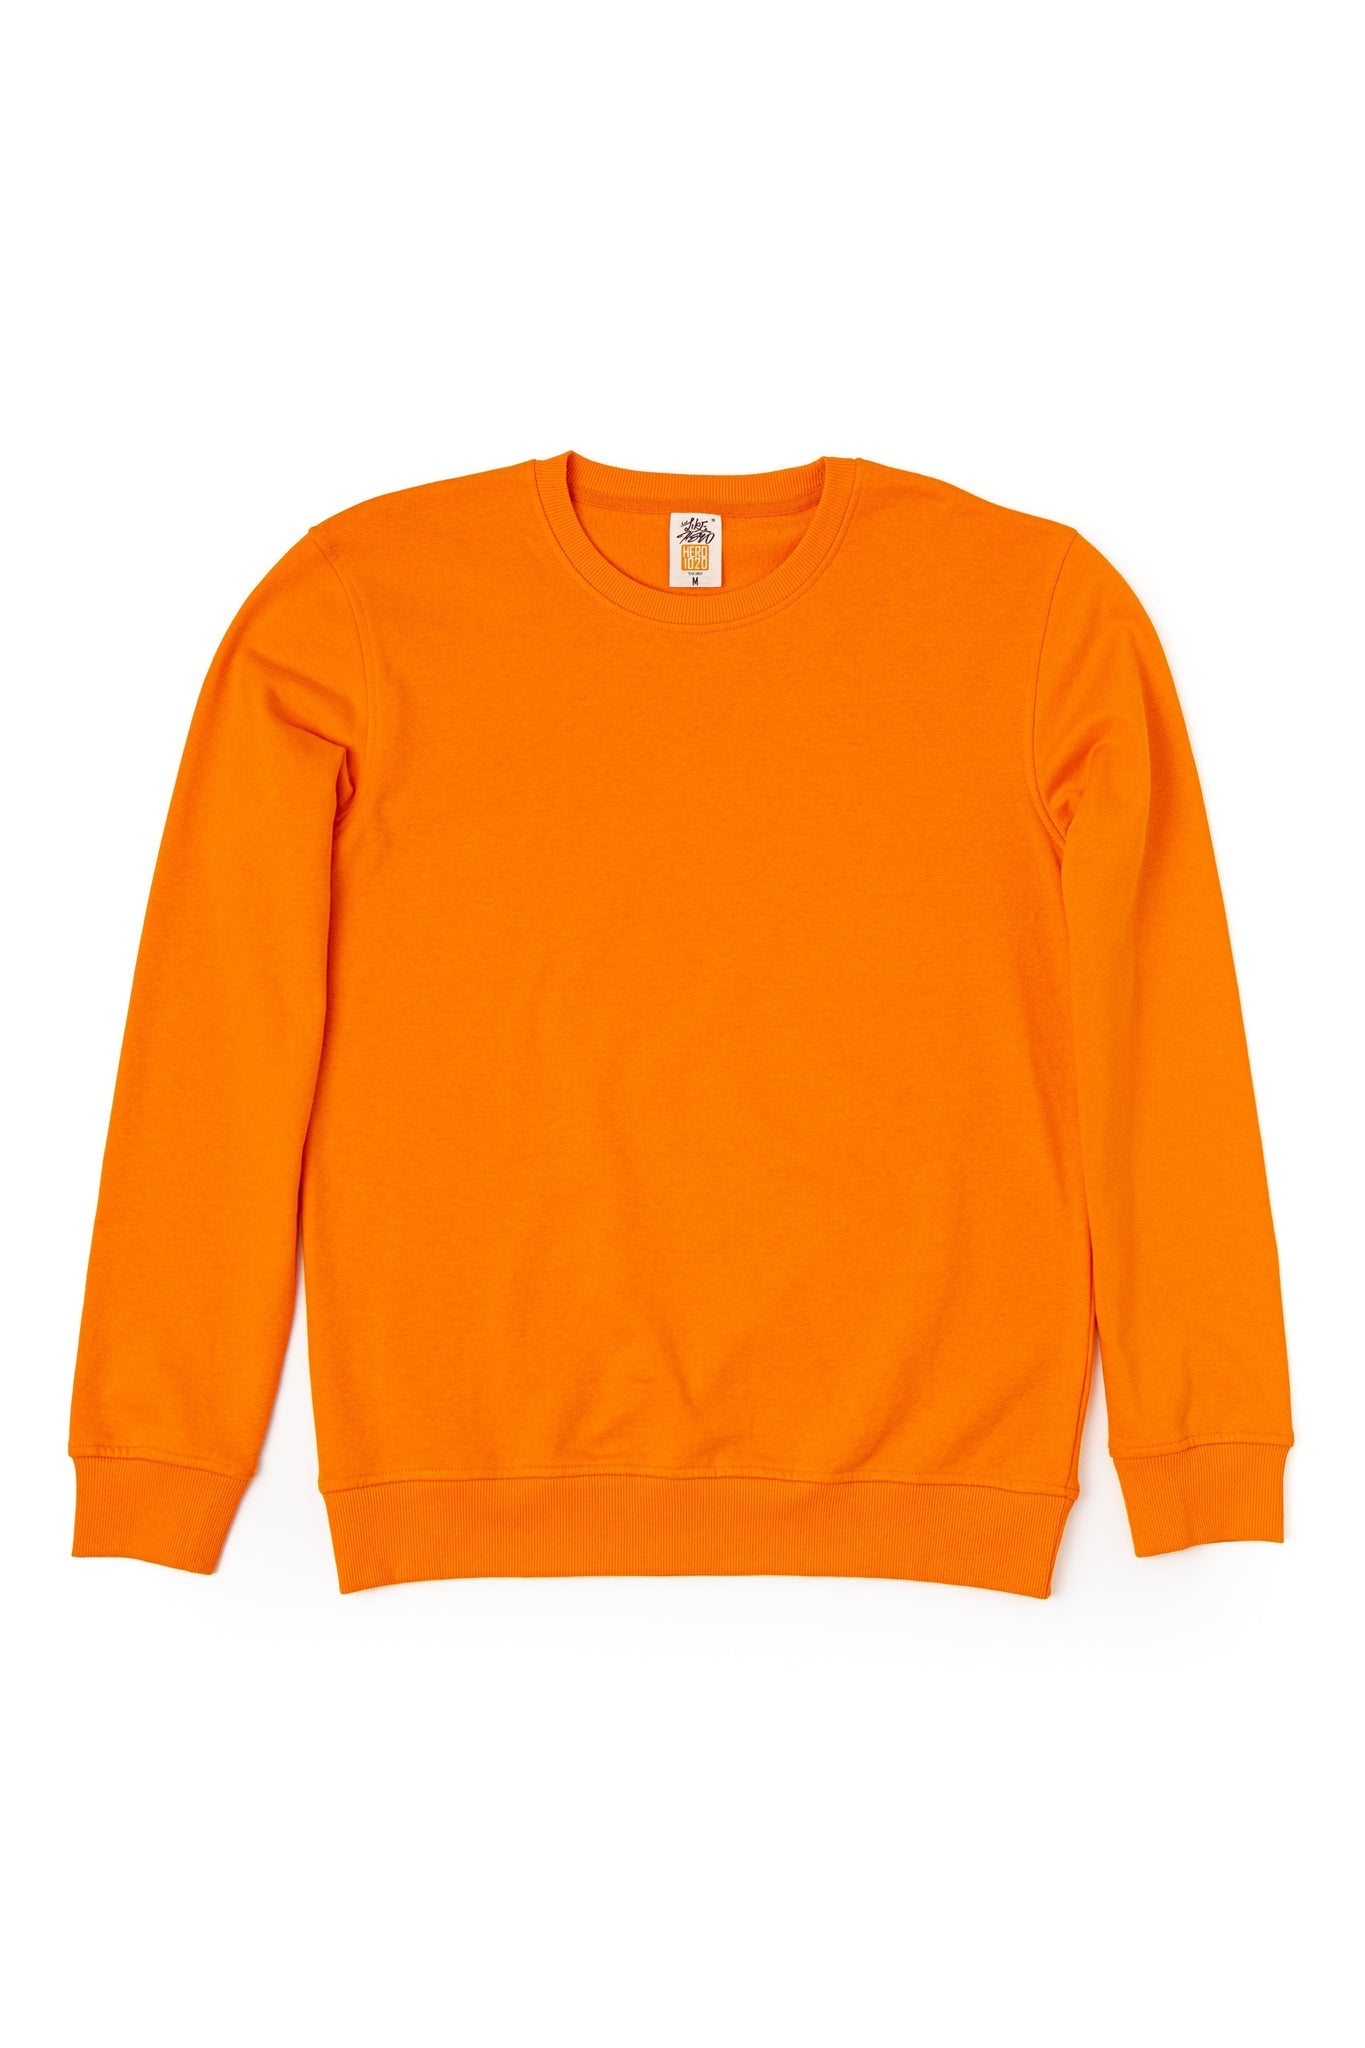 HERO - 1020 Unisex Blank Crewneck Sweatshirt - Orange